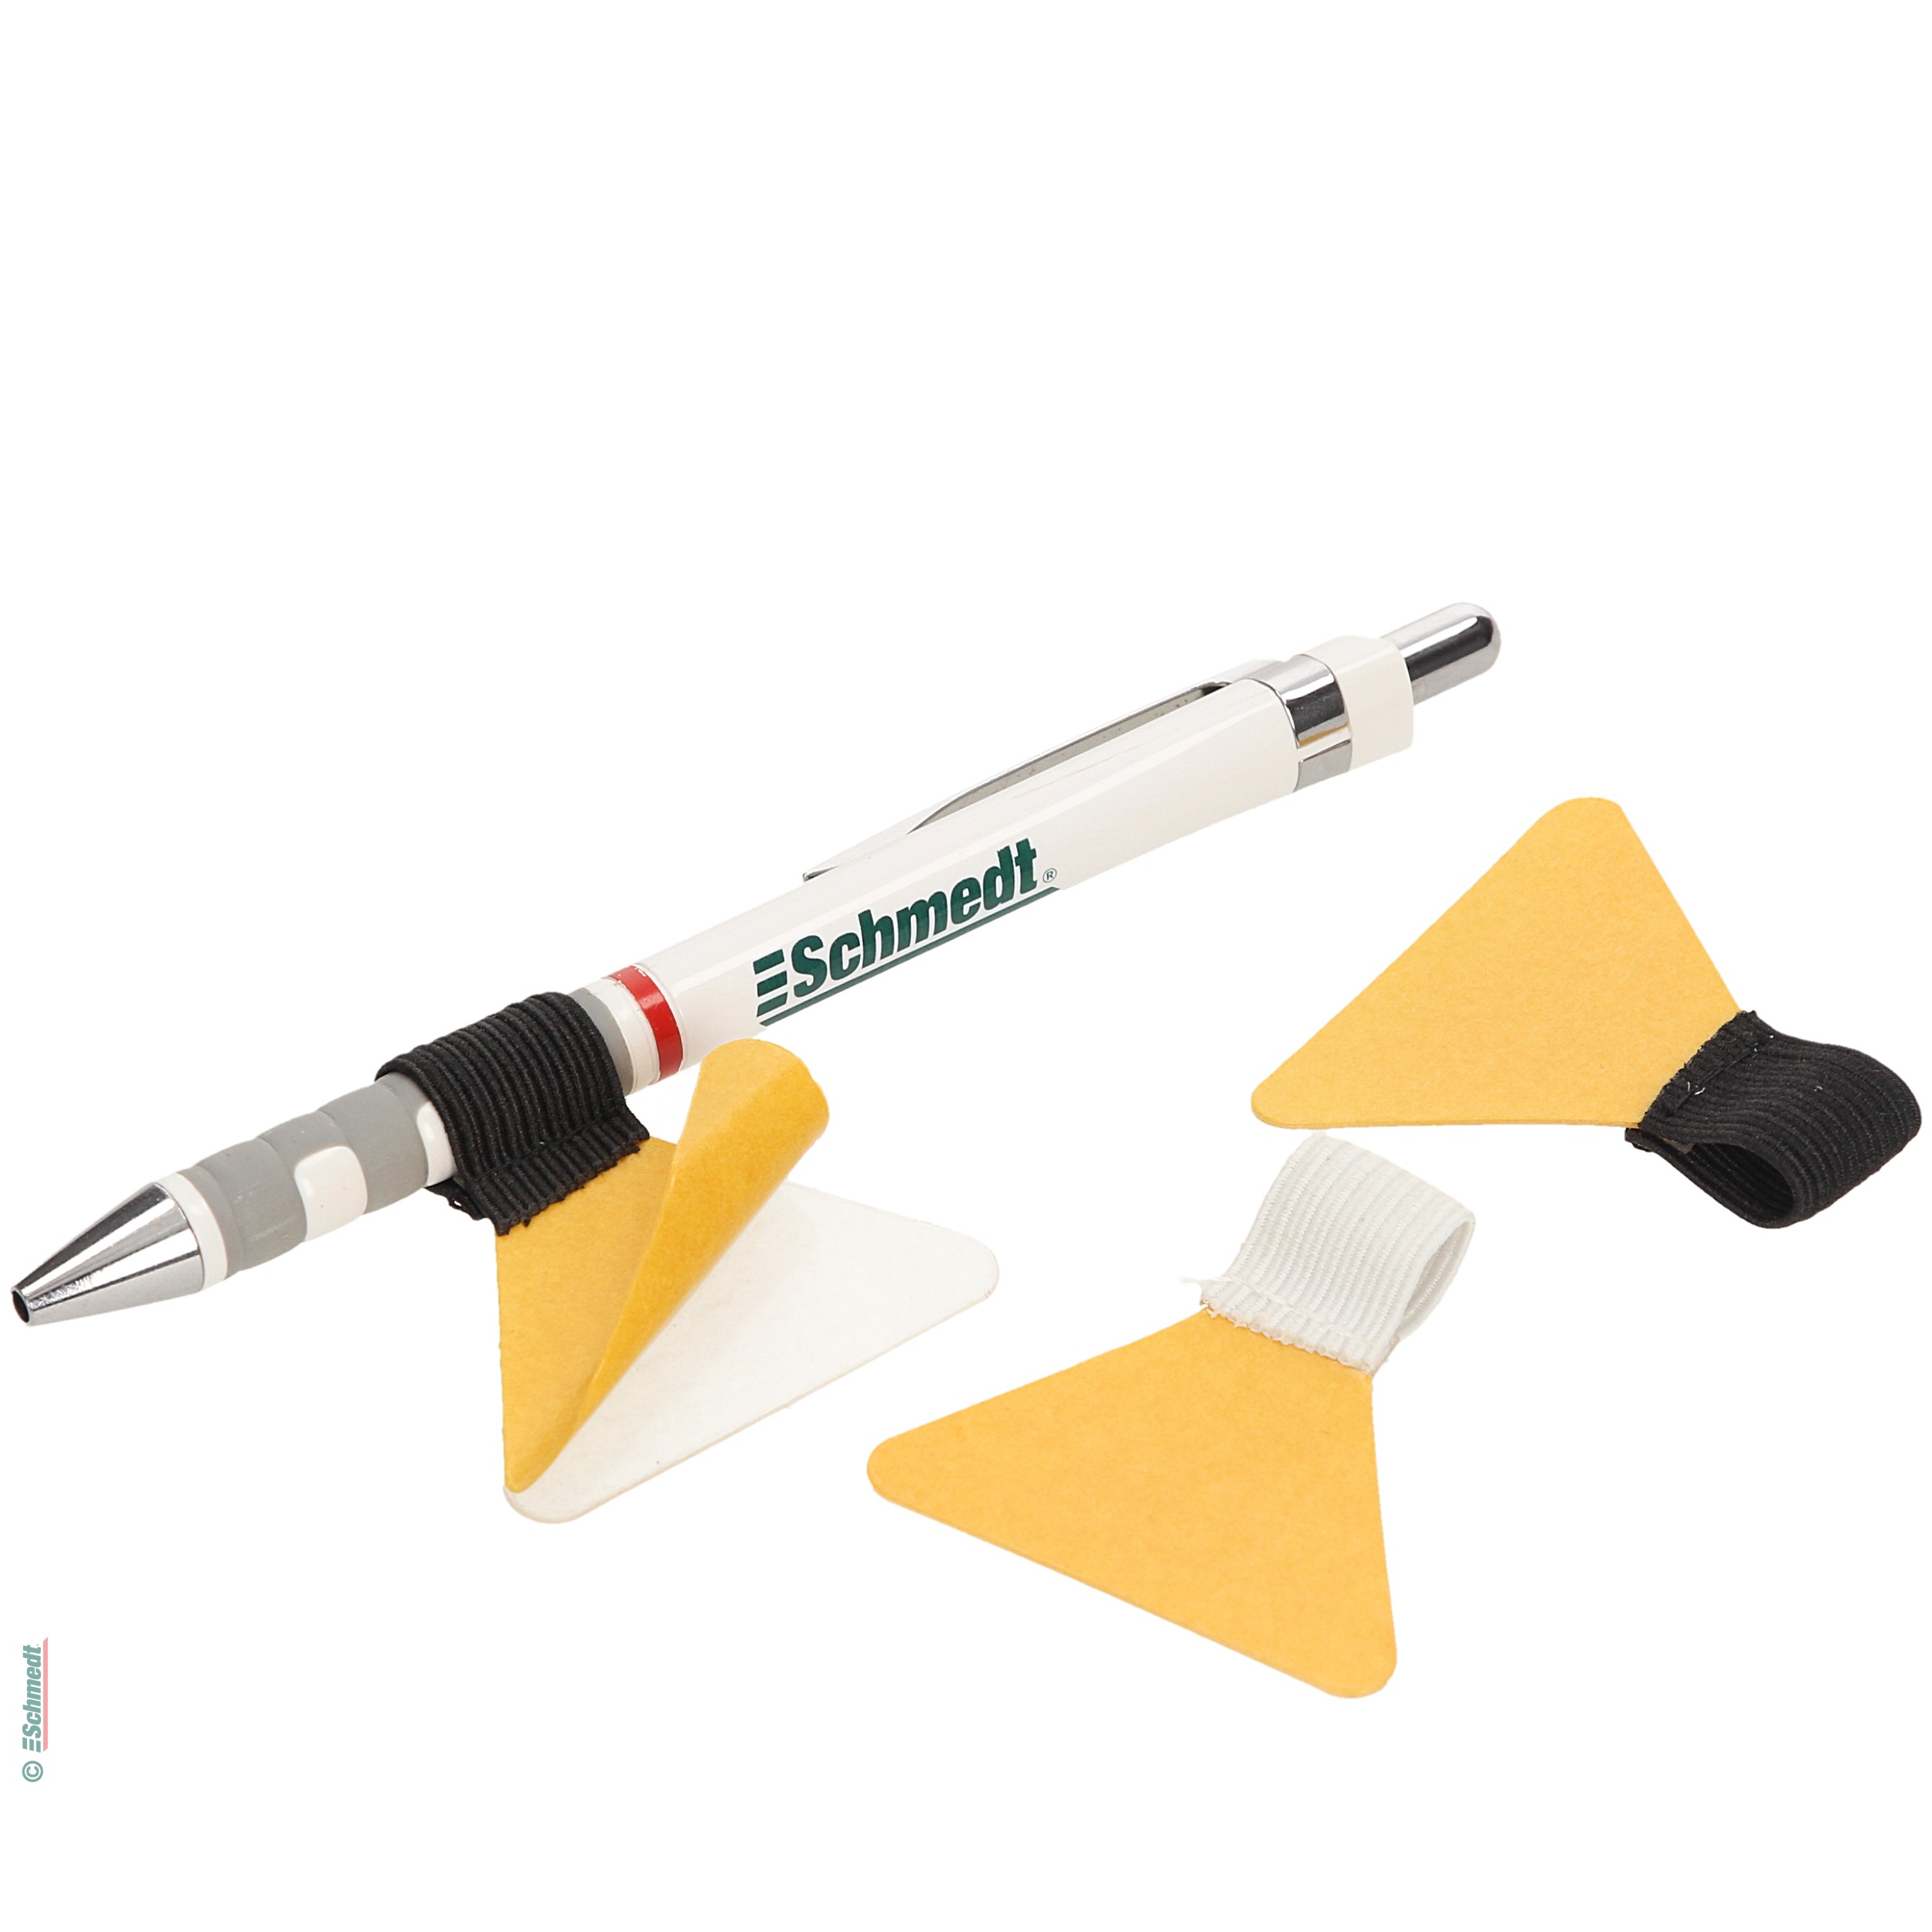 Sujeción para bolígrafos, autoadhesivo - con una lengüeta de cinta plana elástica - Aplicación: para fijar un bolígrafo en un organizador pe...